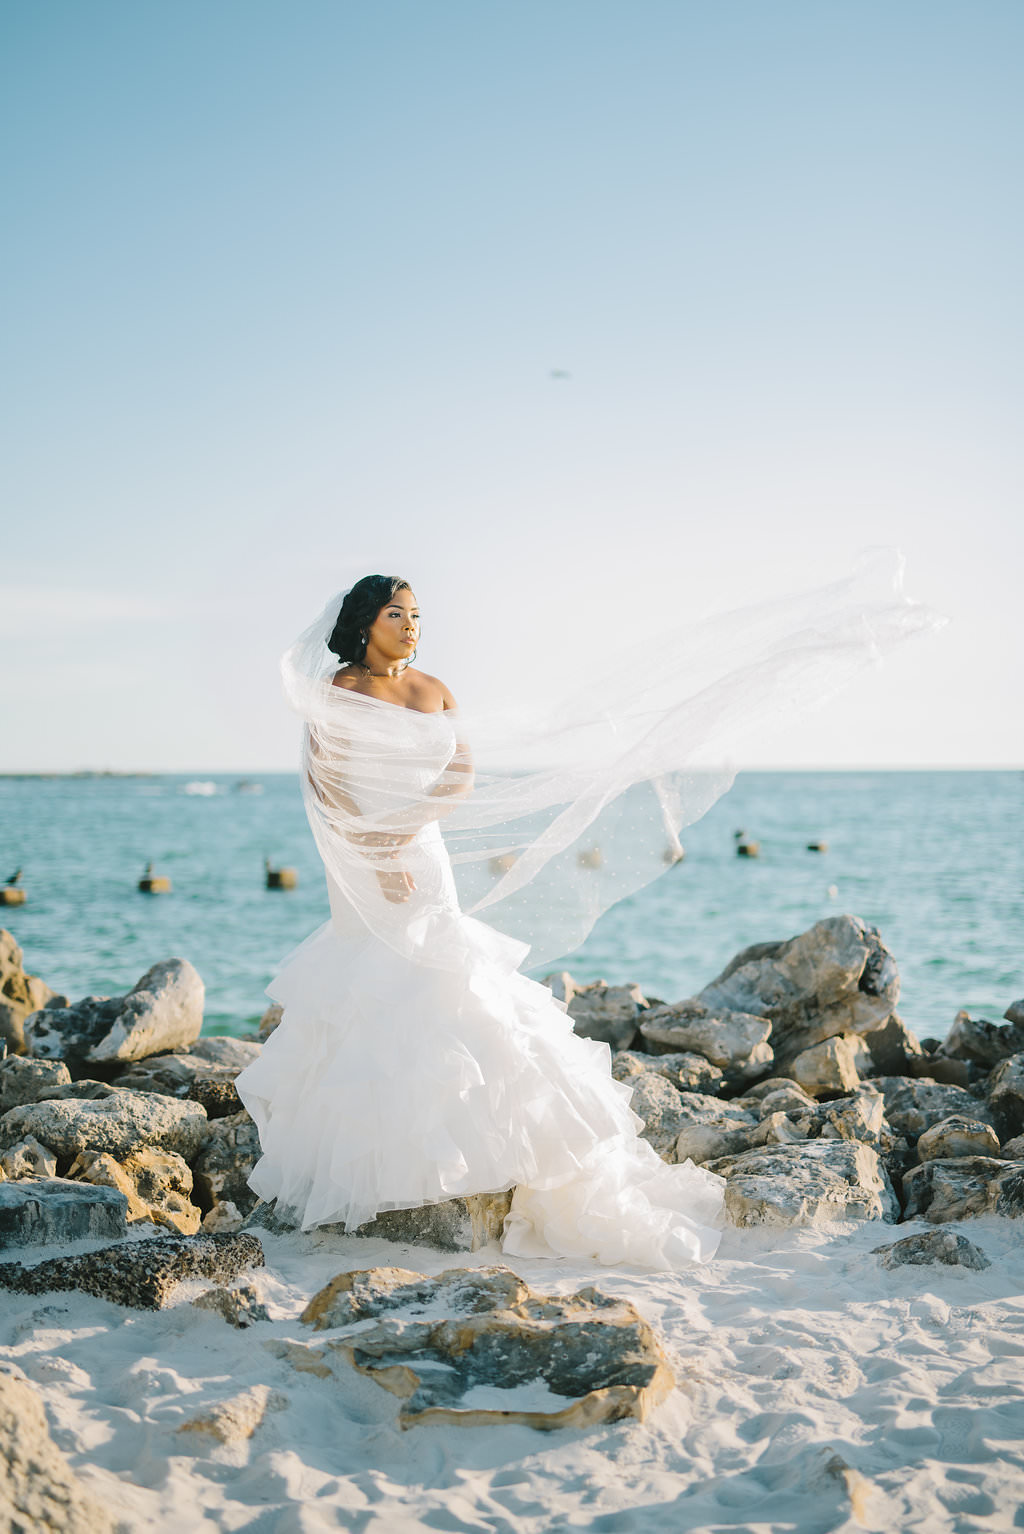 Beachfront Florida Bride Wedding Portrait with Veil Blowing in Wind | Tampa Bay Wedding Photographer Kera Photography | Clearwater Beach Wedding Venue Opal Sands Resort